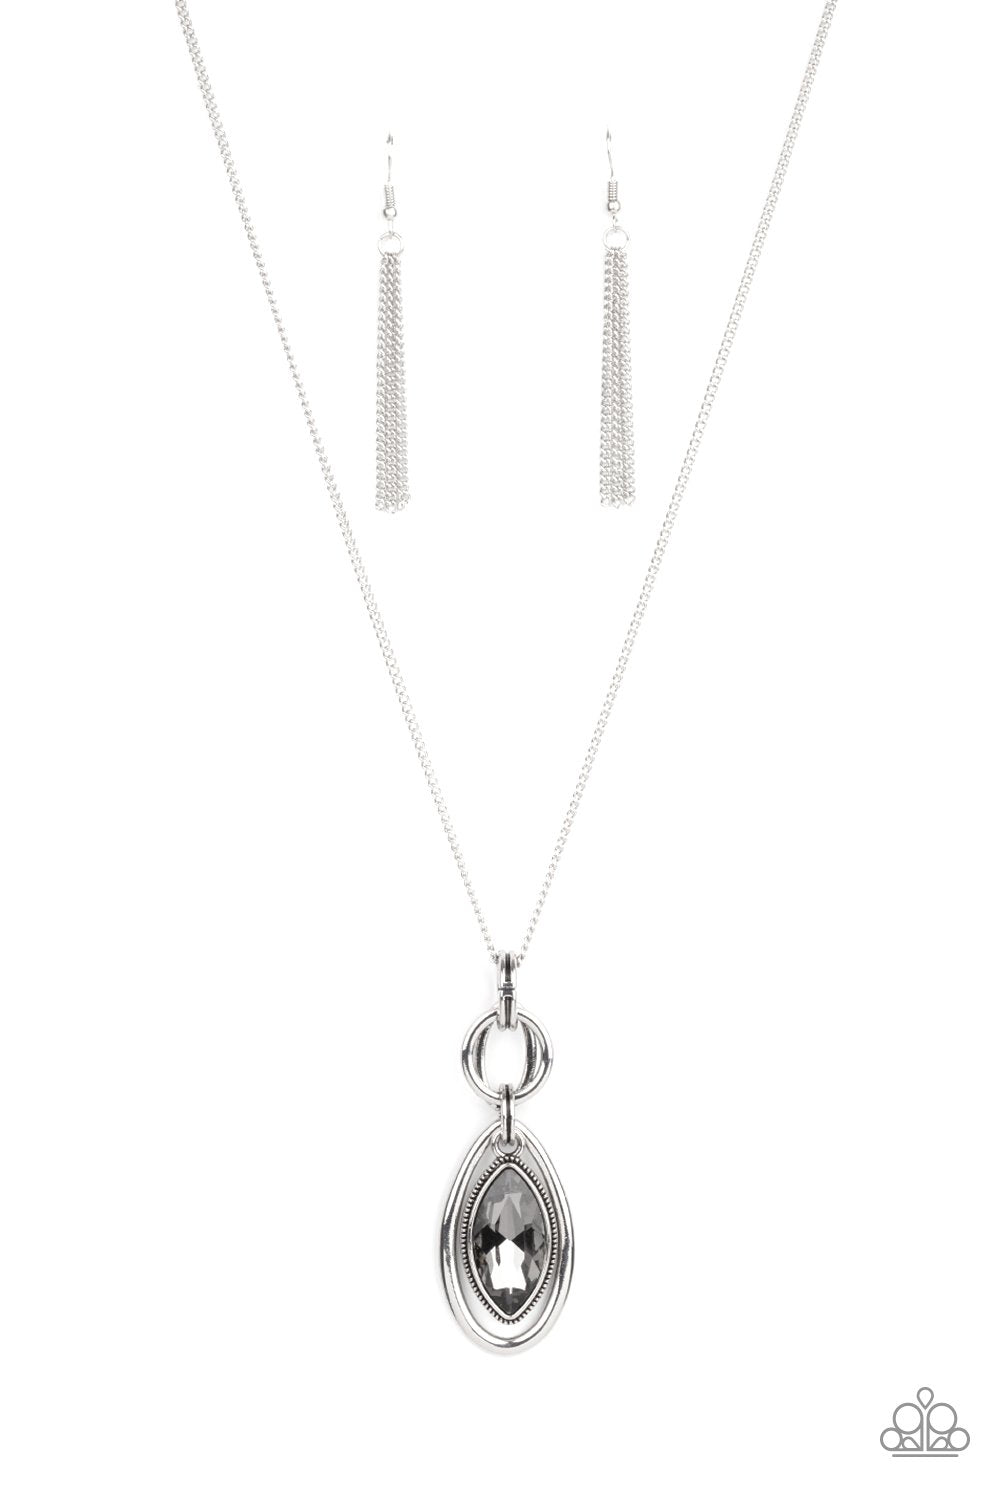 Glamorously Glaring Smoky Silver Rhinestone Necklace - Paparazzi Accessories- lightbox - CarasShop.com - $5 Jewelry by Cara Jewels